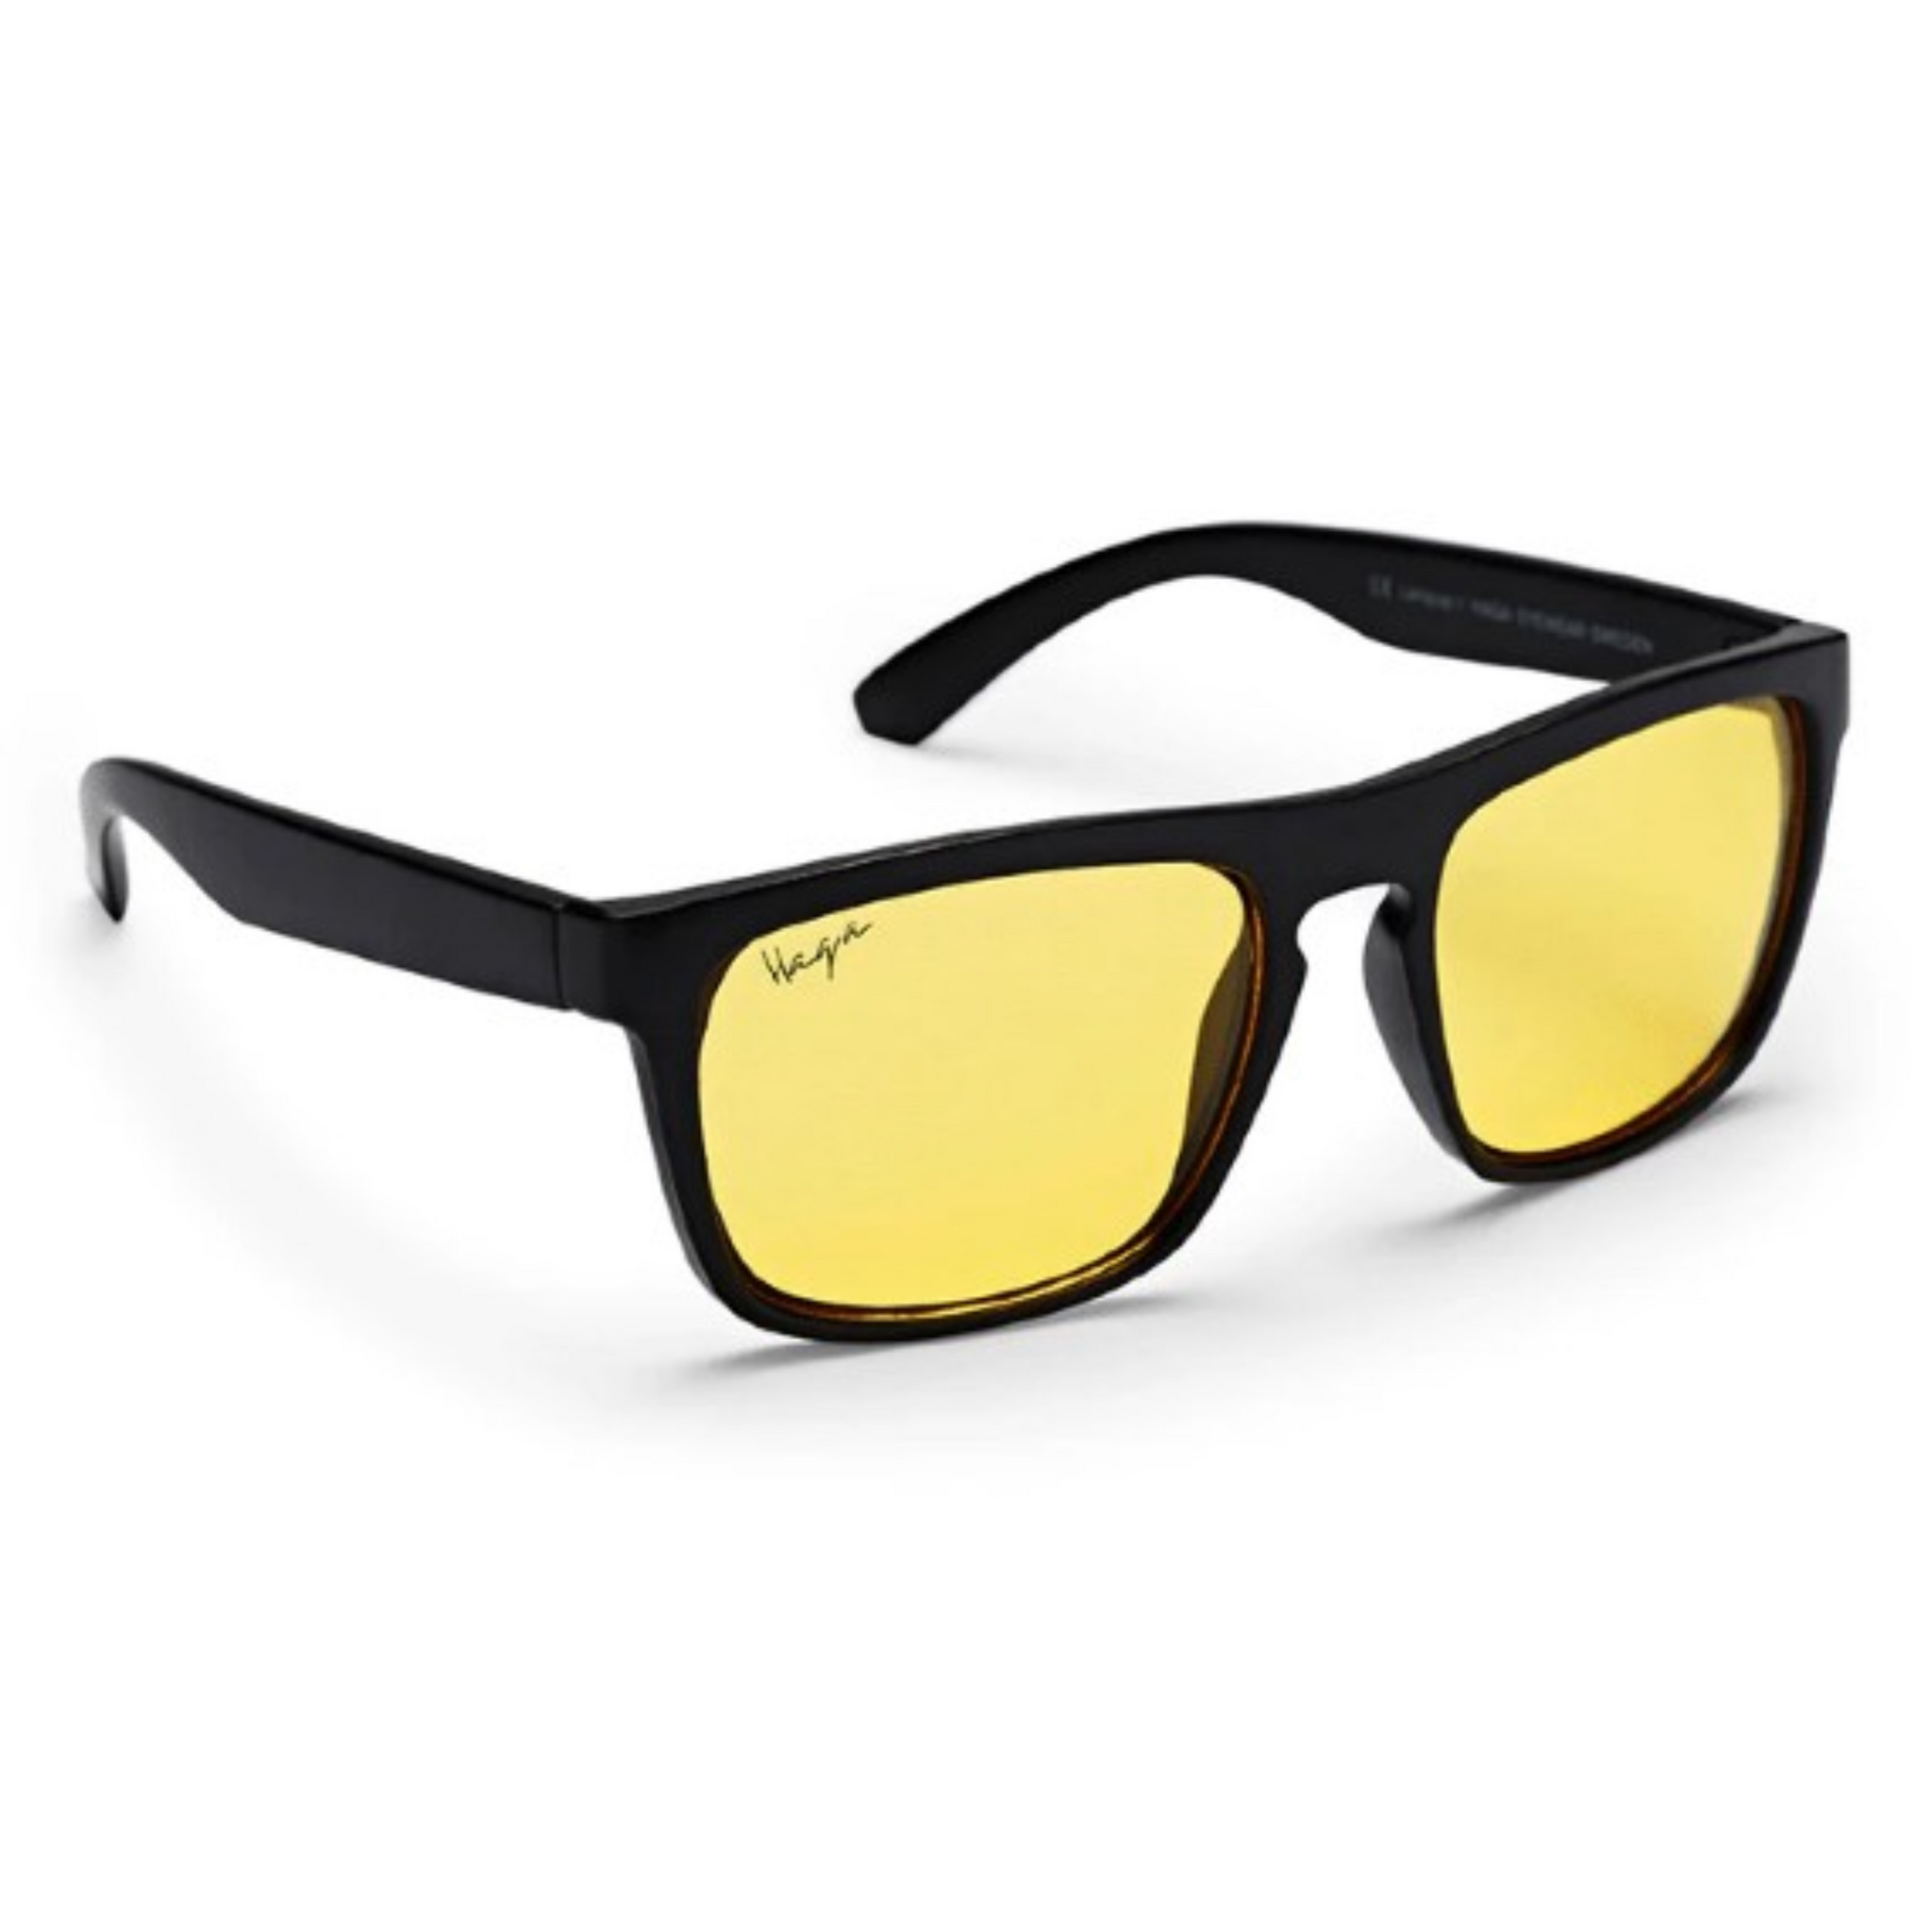 Haga Eyewear Tampa Yellow lens - Fritidsport